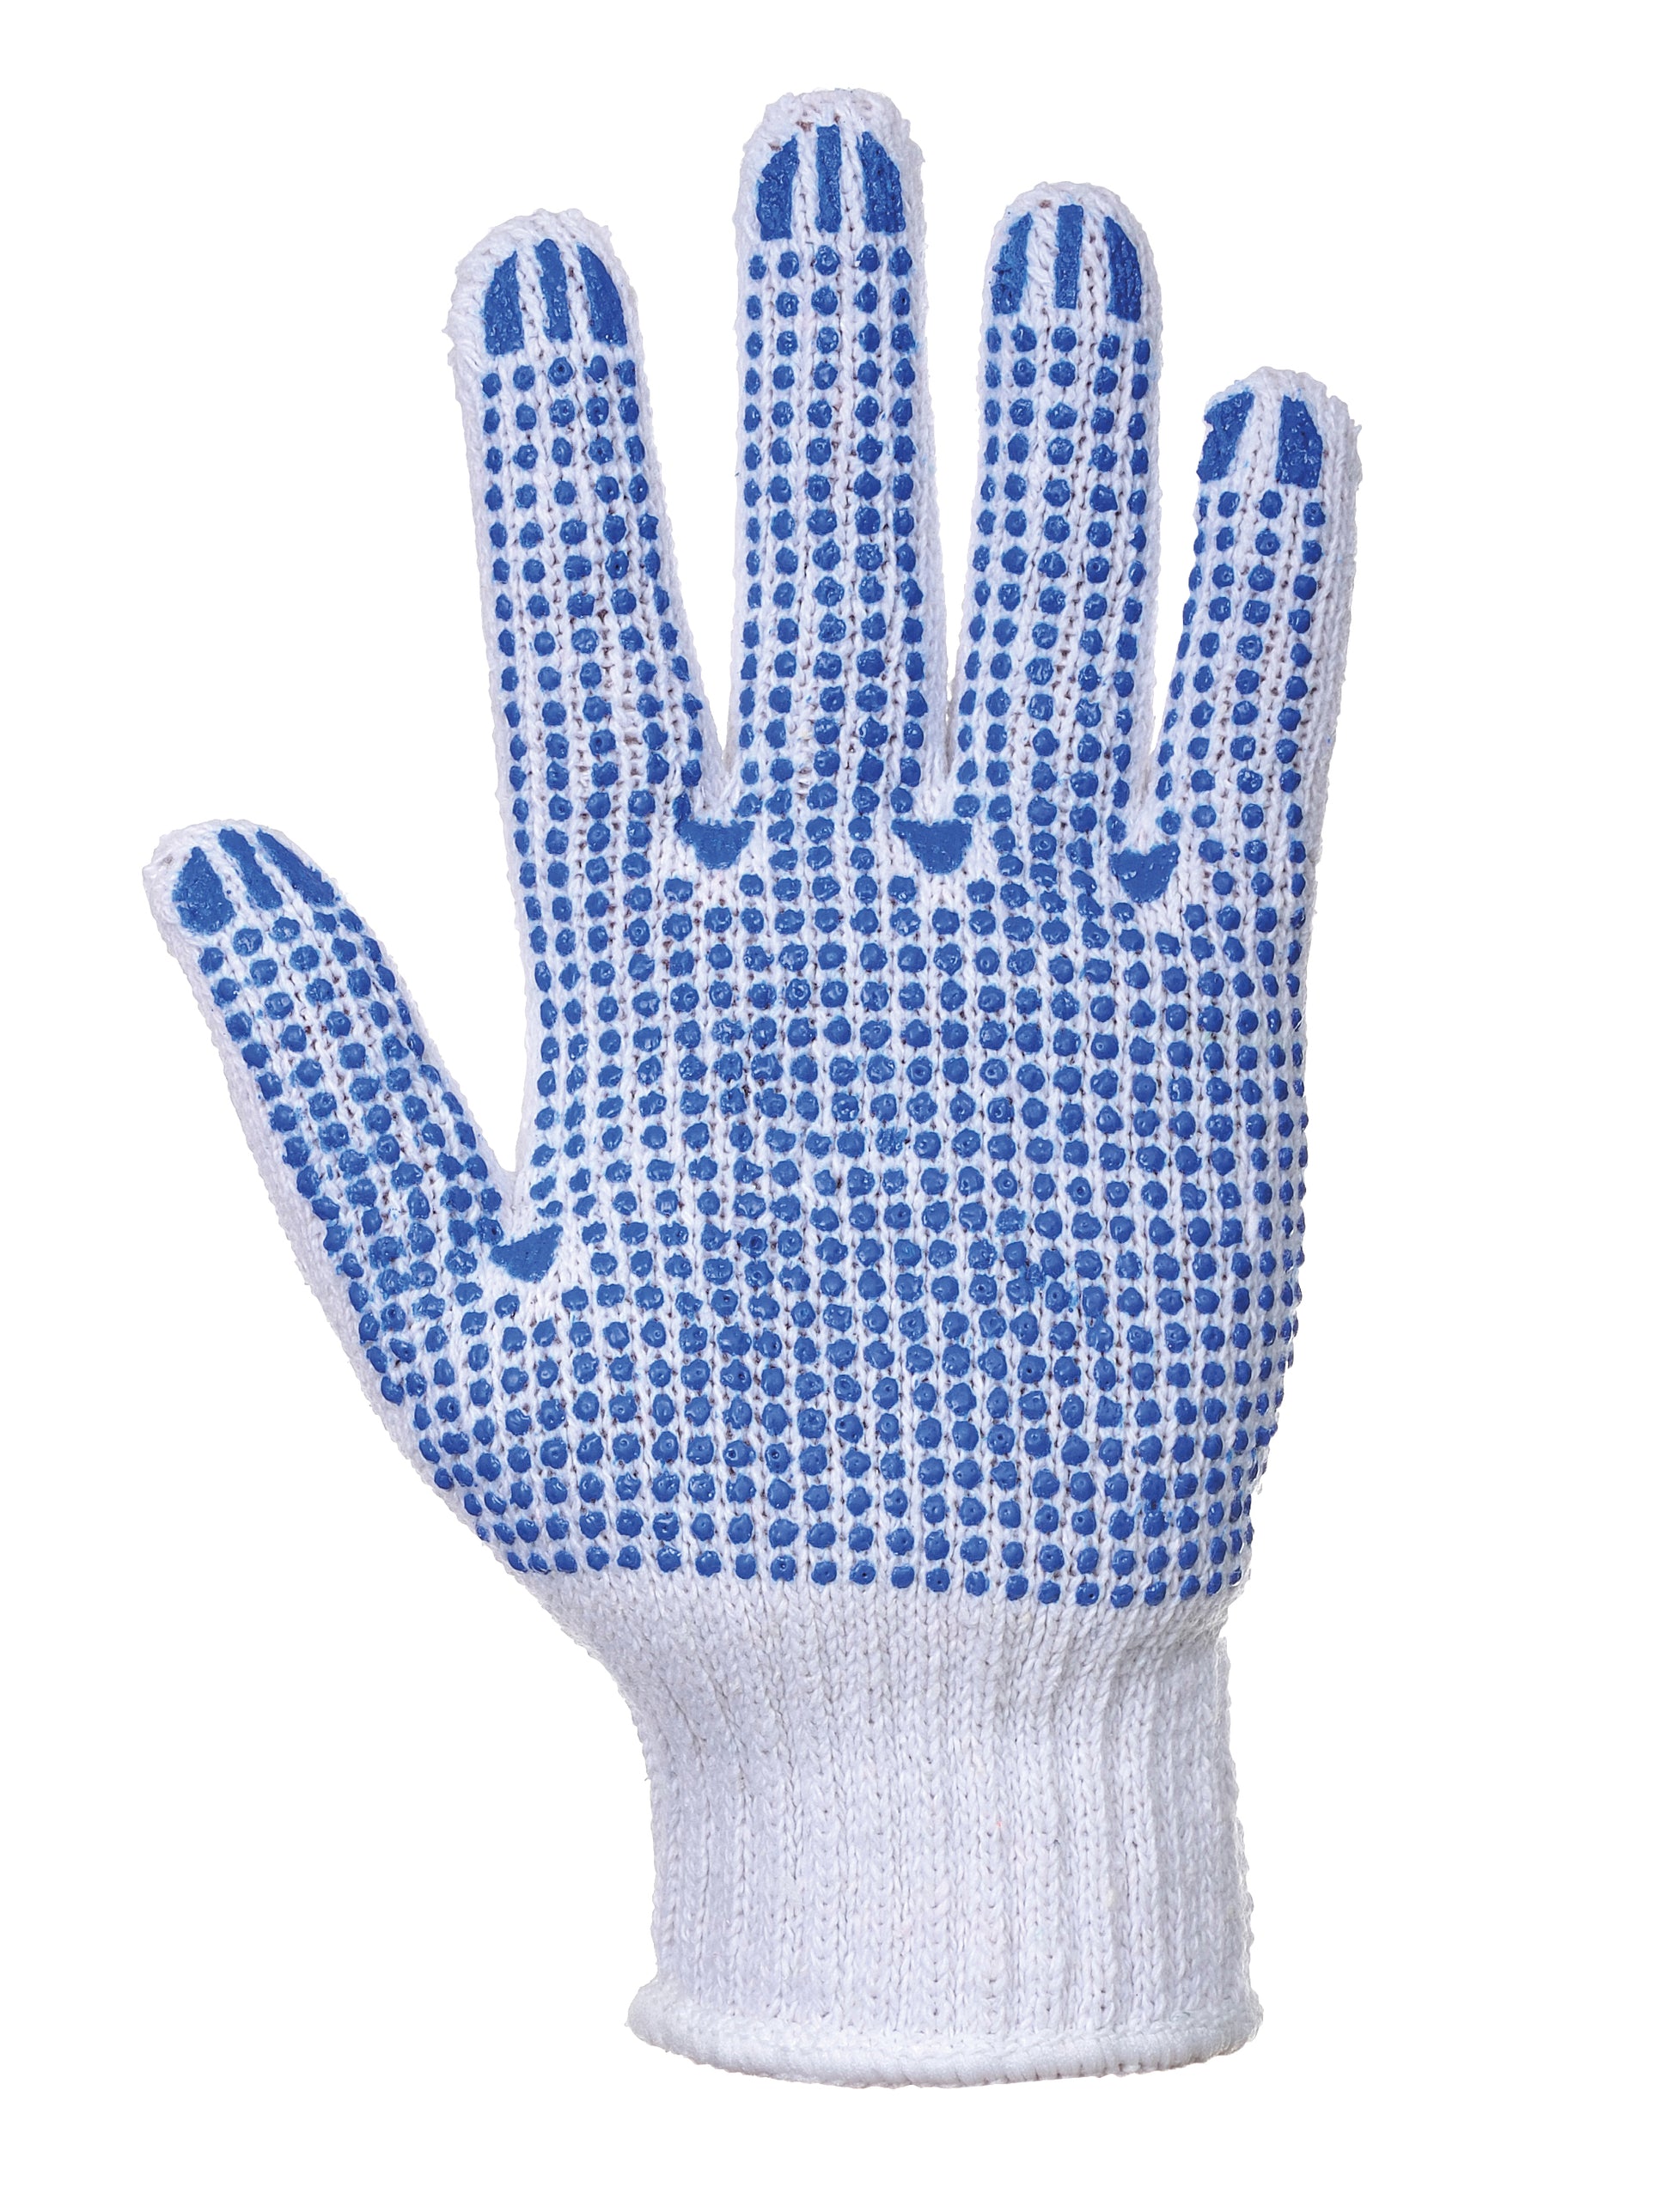 Classic Polka Dot Glove Blue/White - A111 Palm 